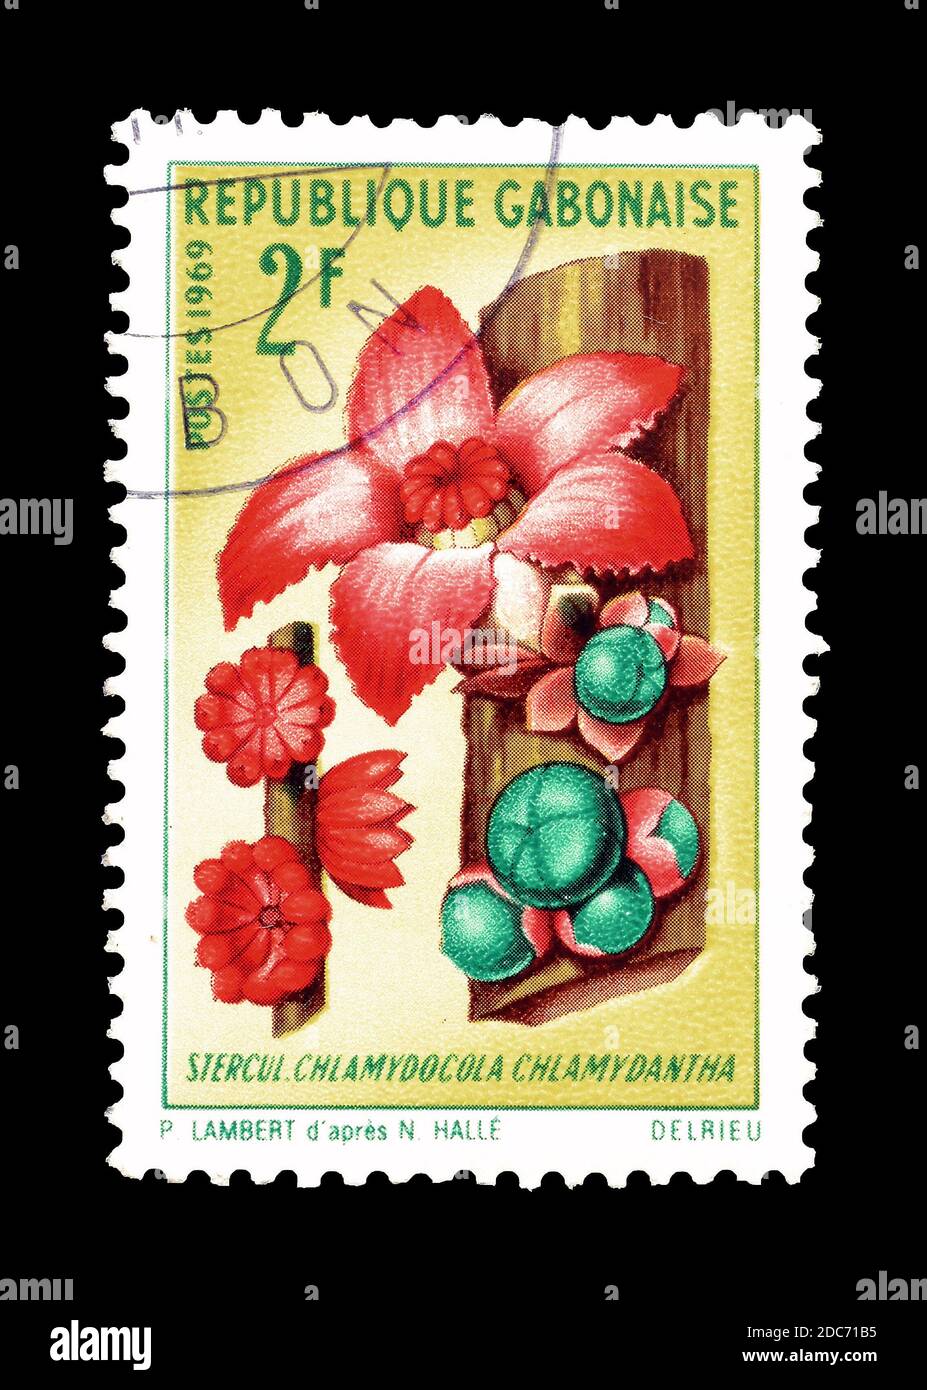 Gabon - circa 1969 : Cancelled postage stamp printed by Gabon, that shows Chlamydocola chlamydantha tree, circa 1969. Stock Photo